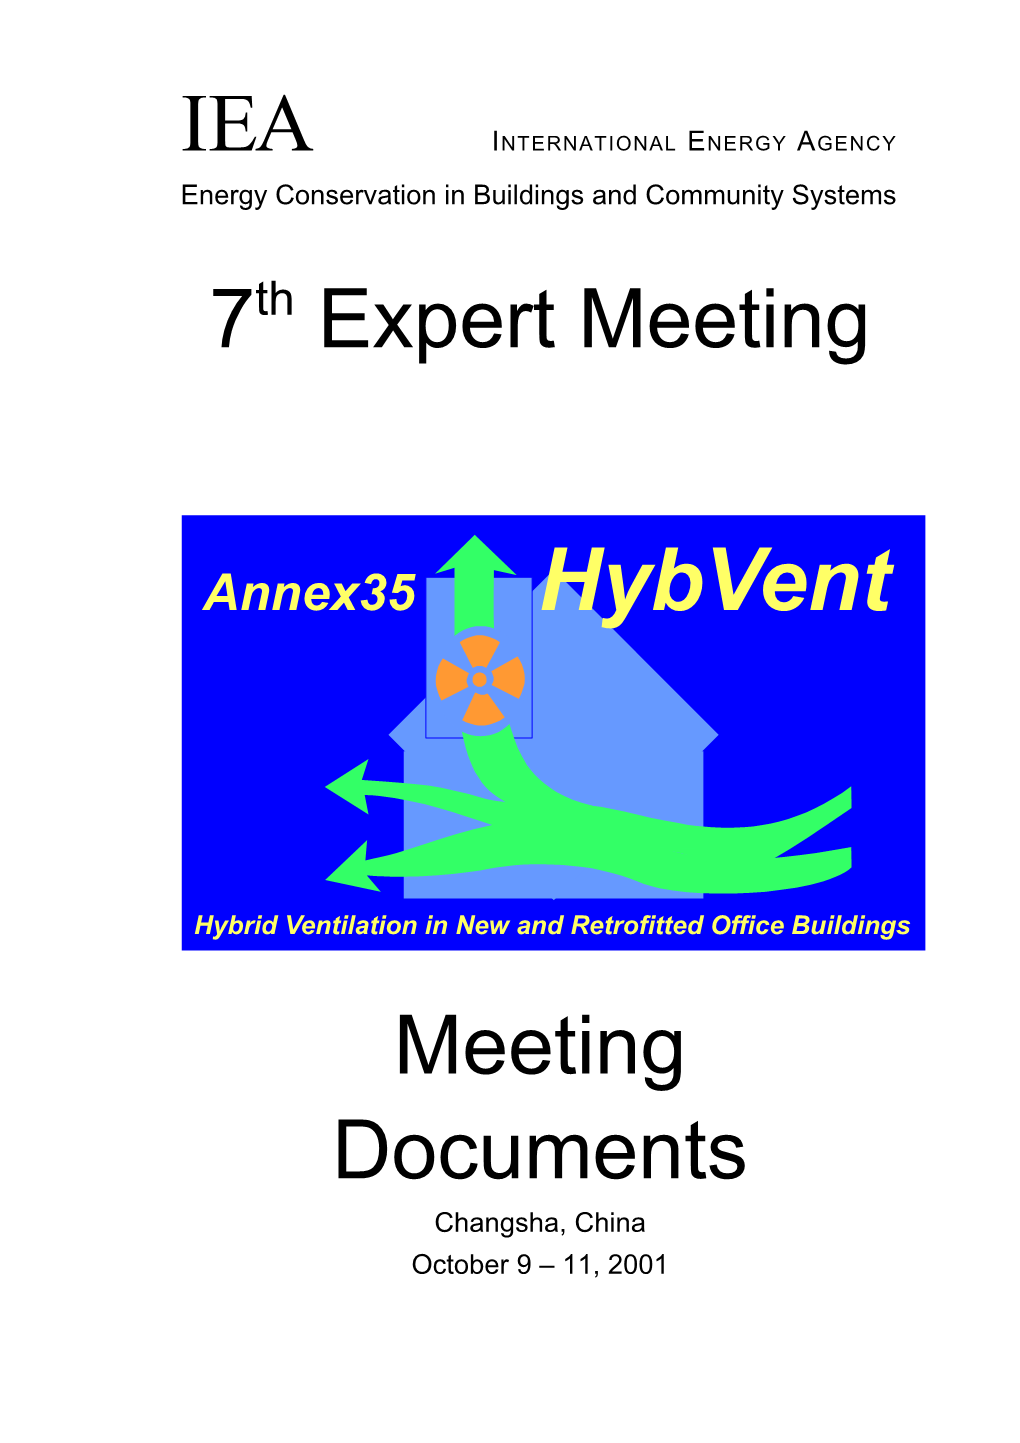 IEA ECBCS Annex 35 : Hybvent